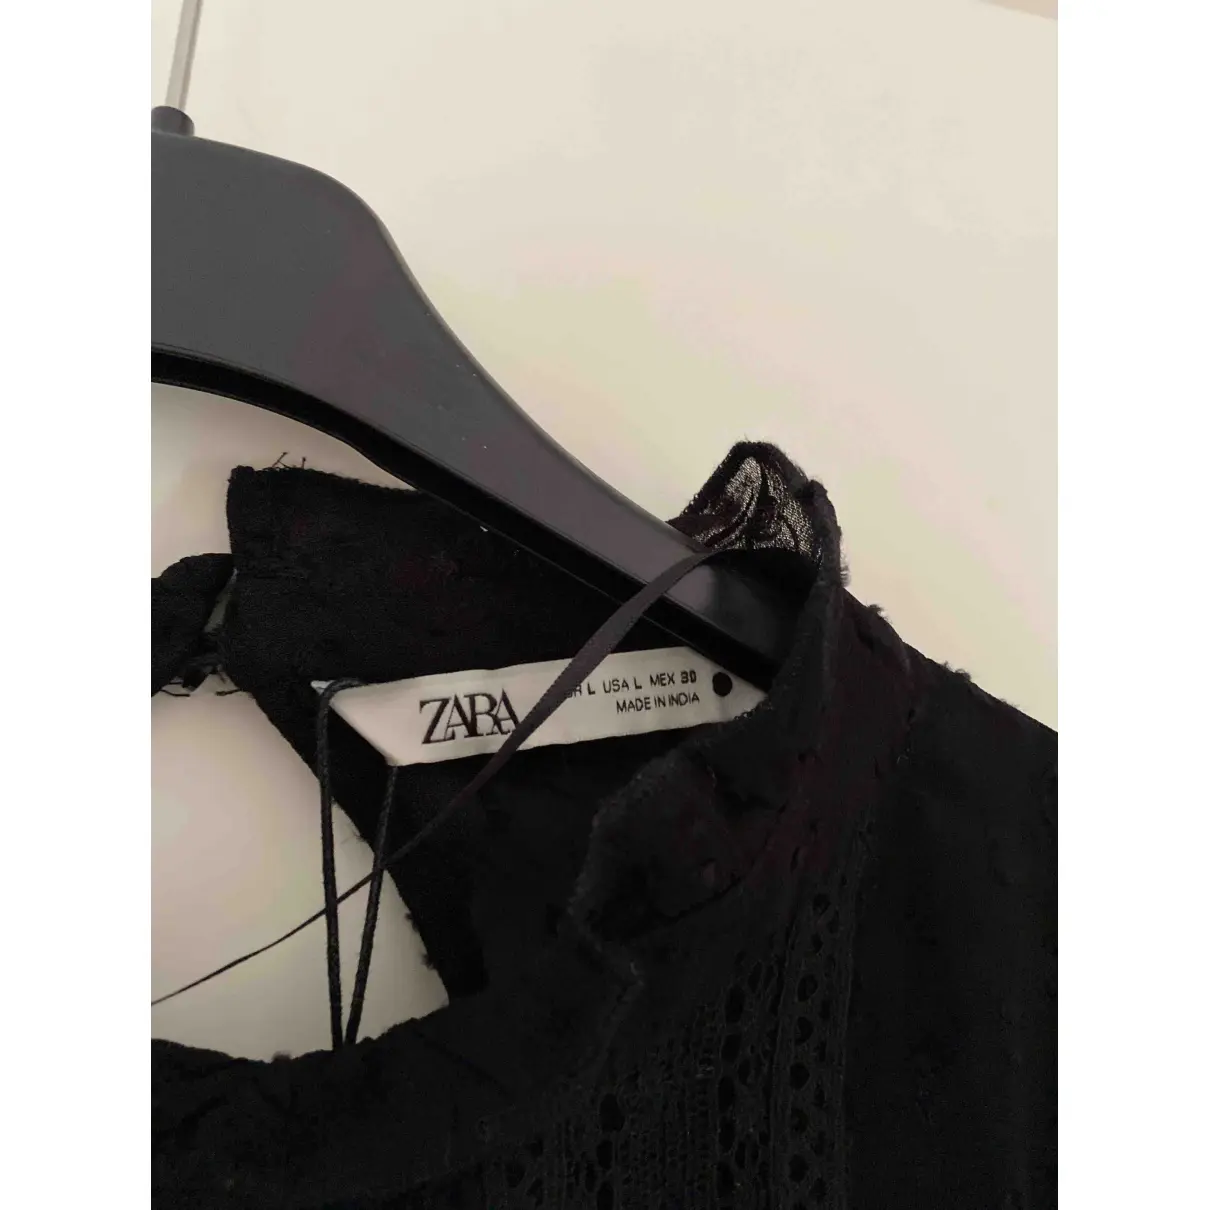 Buy Zara Black Polyester Top online